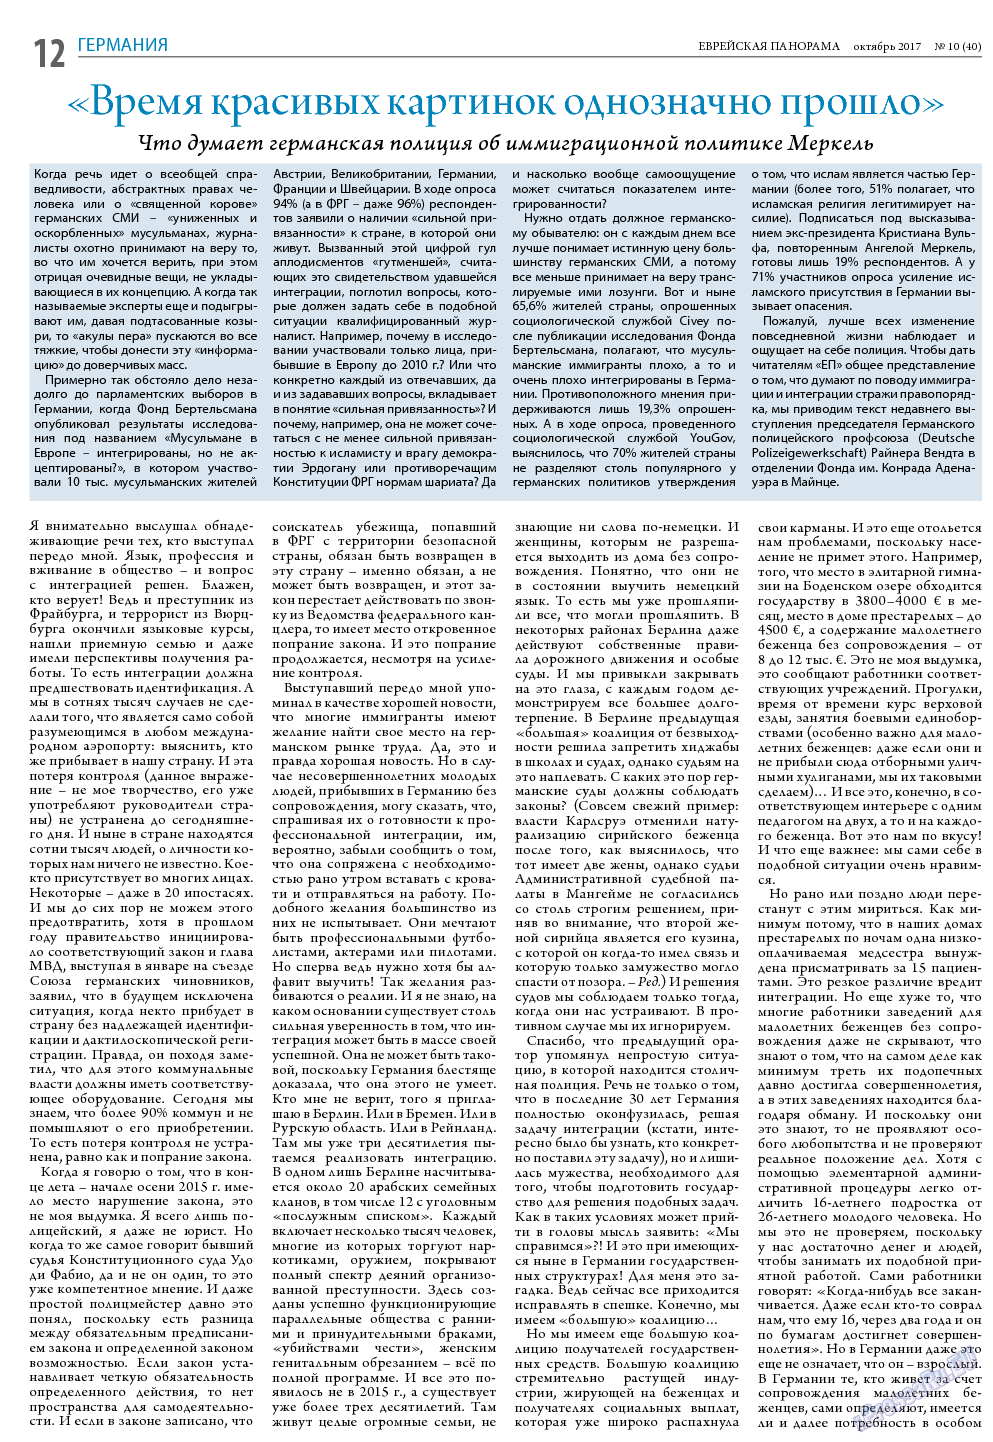 Еврейская панорама, газета. 2017 №10 стр.12